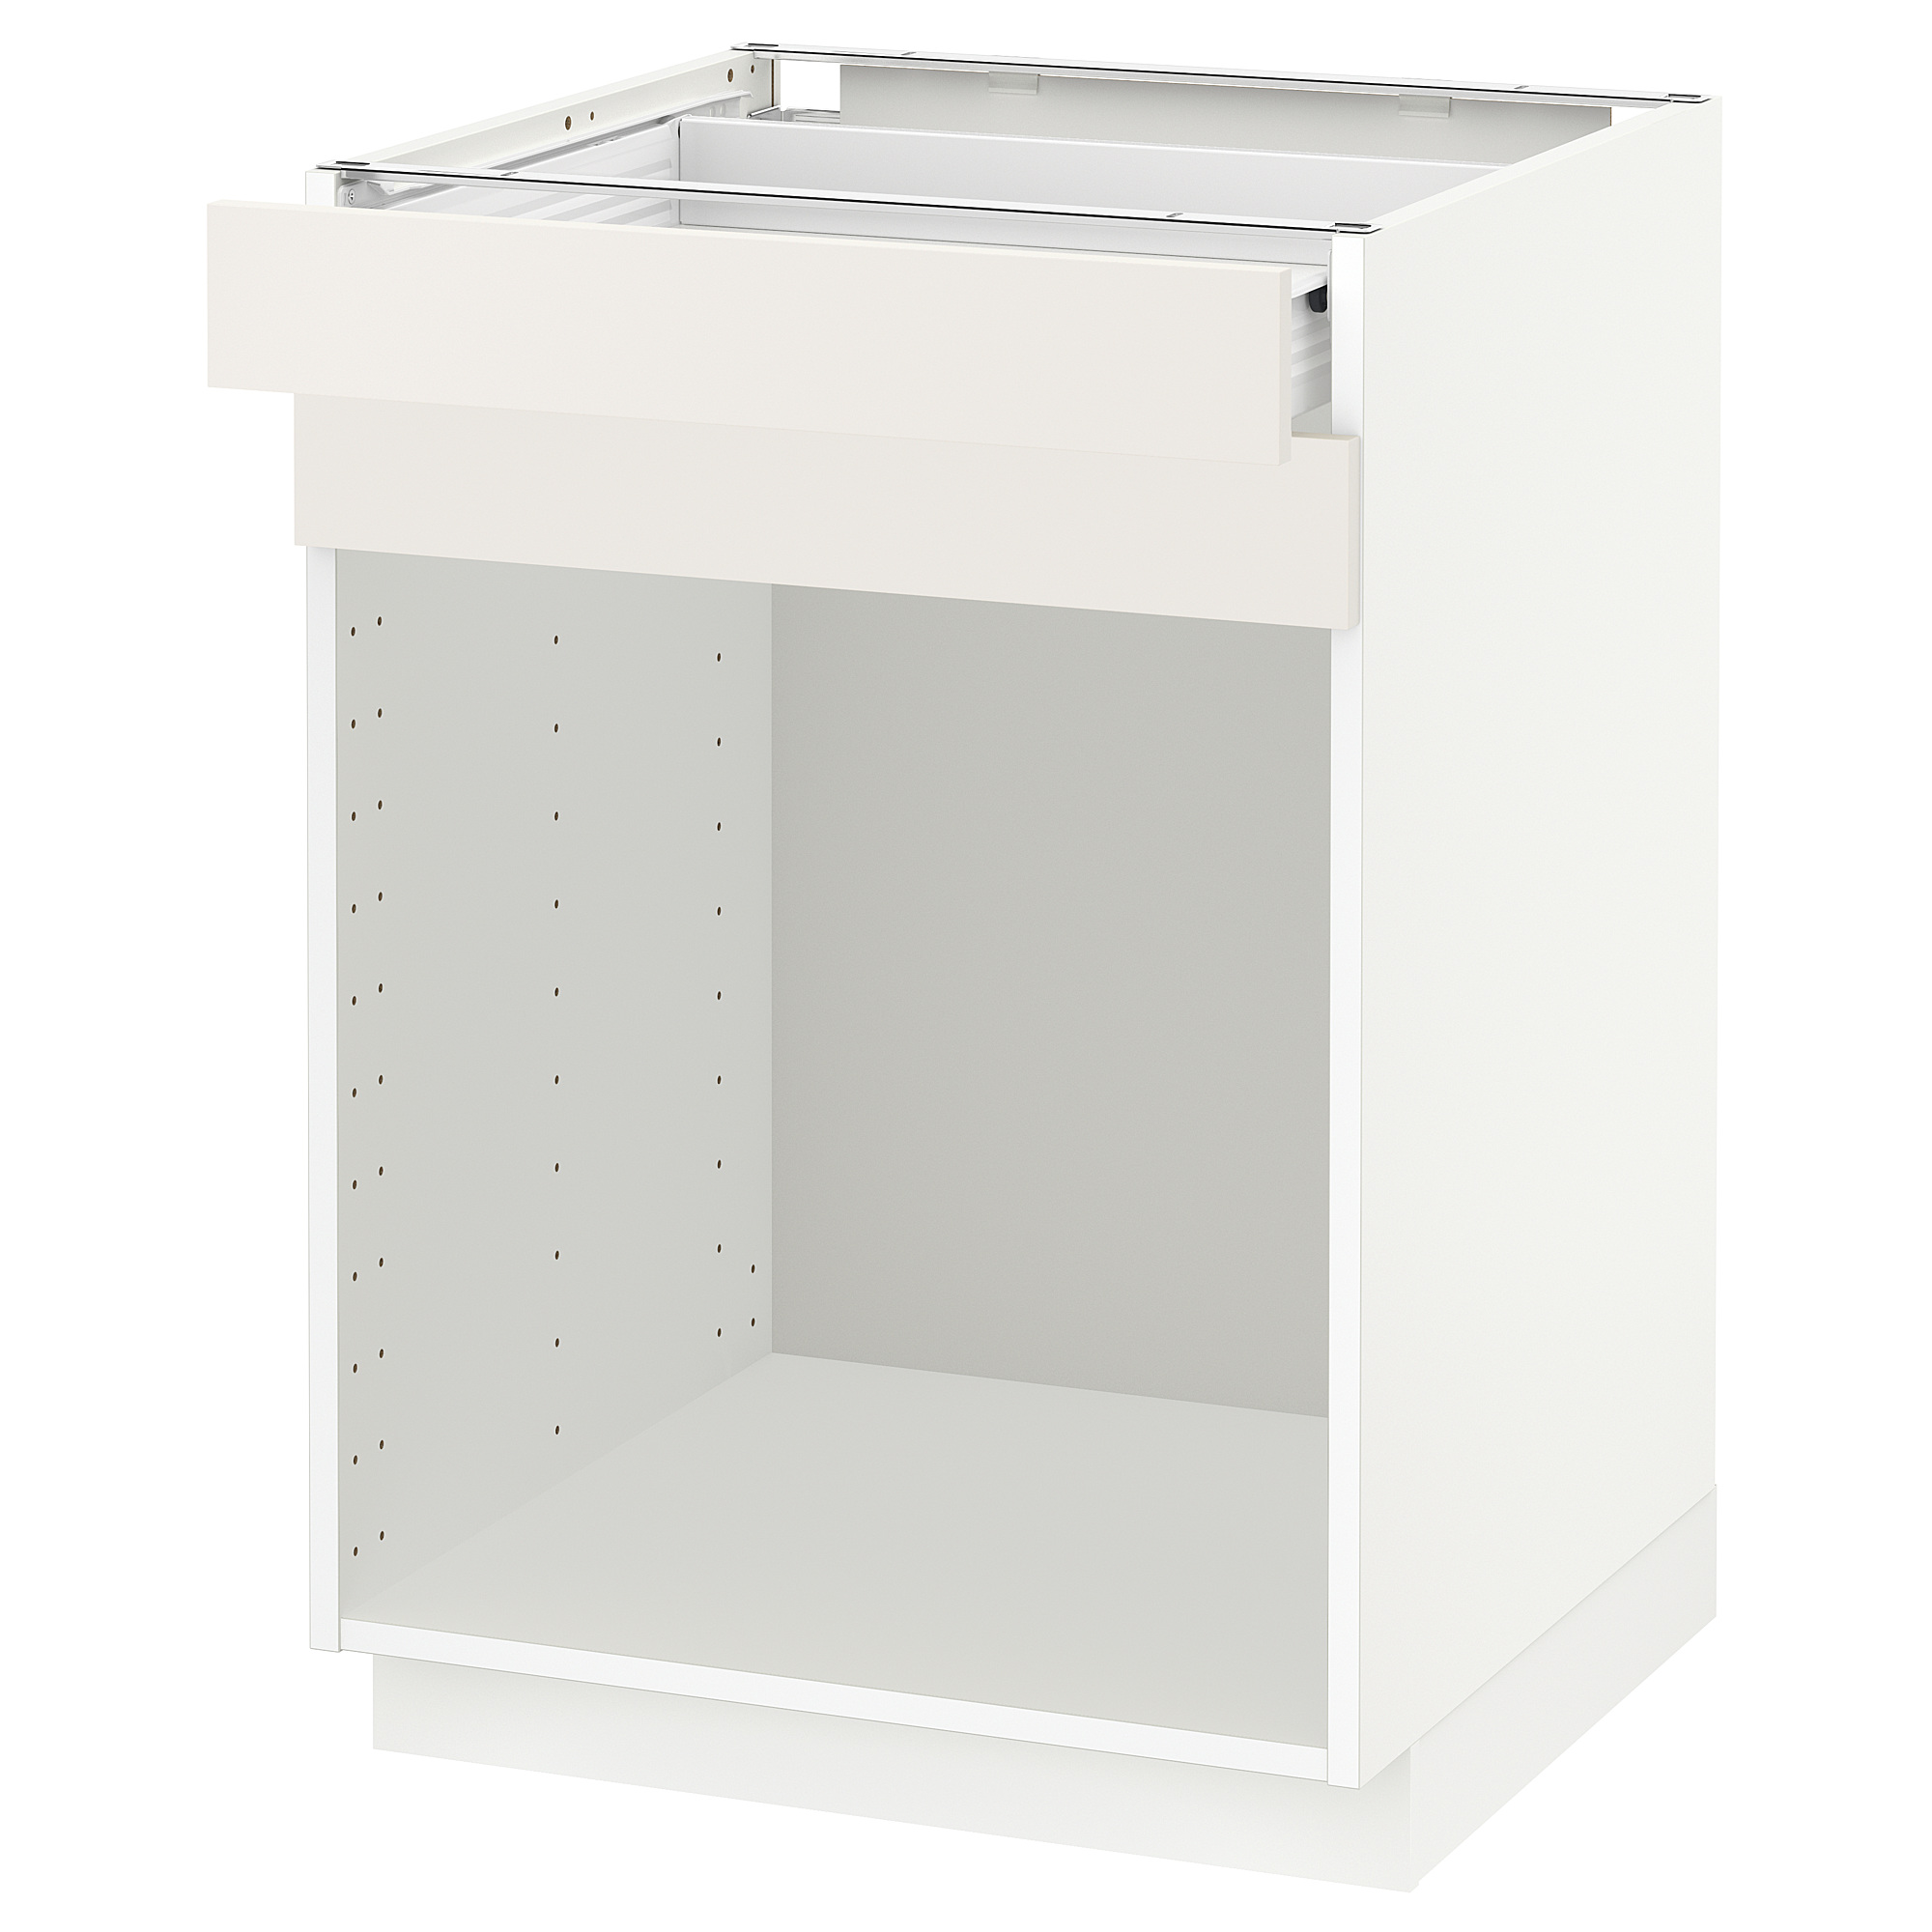 METOD base cabinet f steriliser/drawer